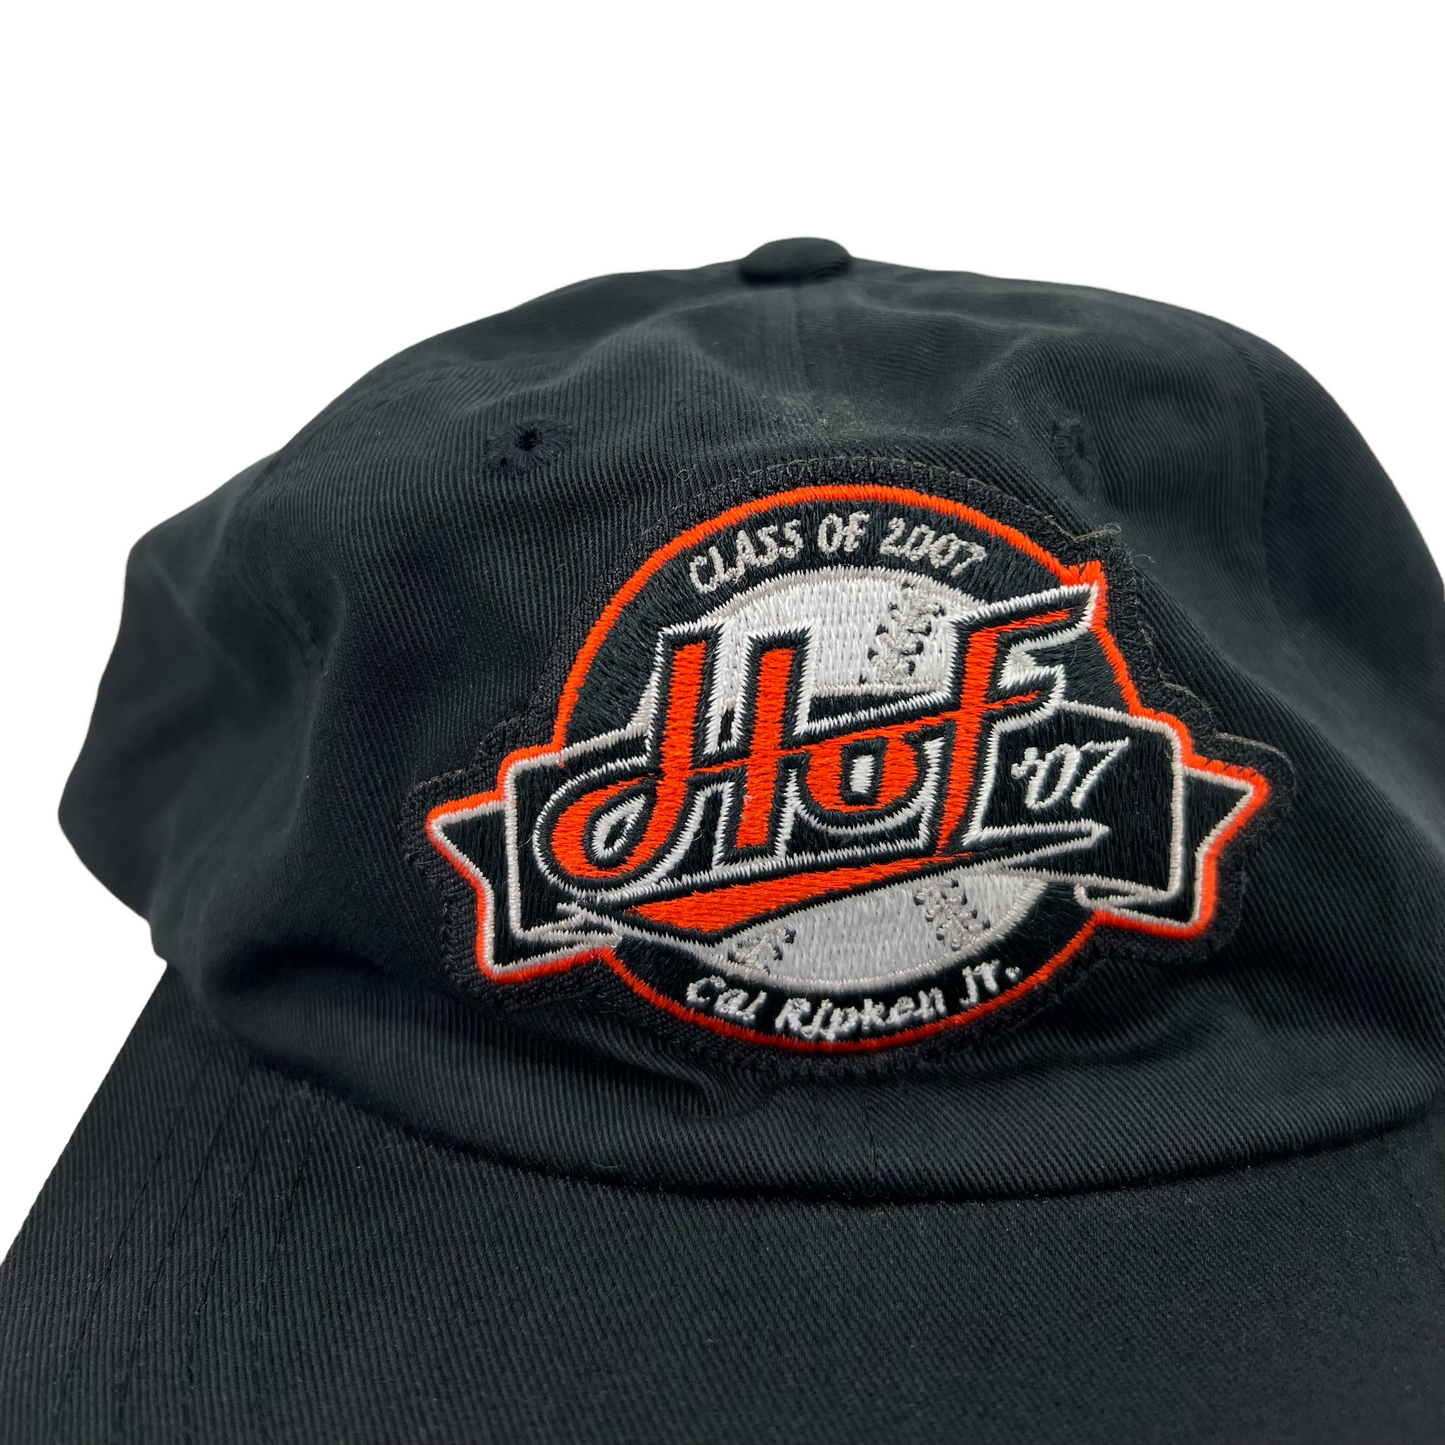 2007 Hall of Fame Class Cal Ripken Jr. Baltimore orioles strap back hat